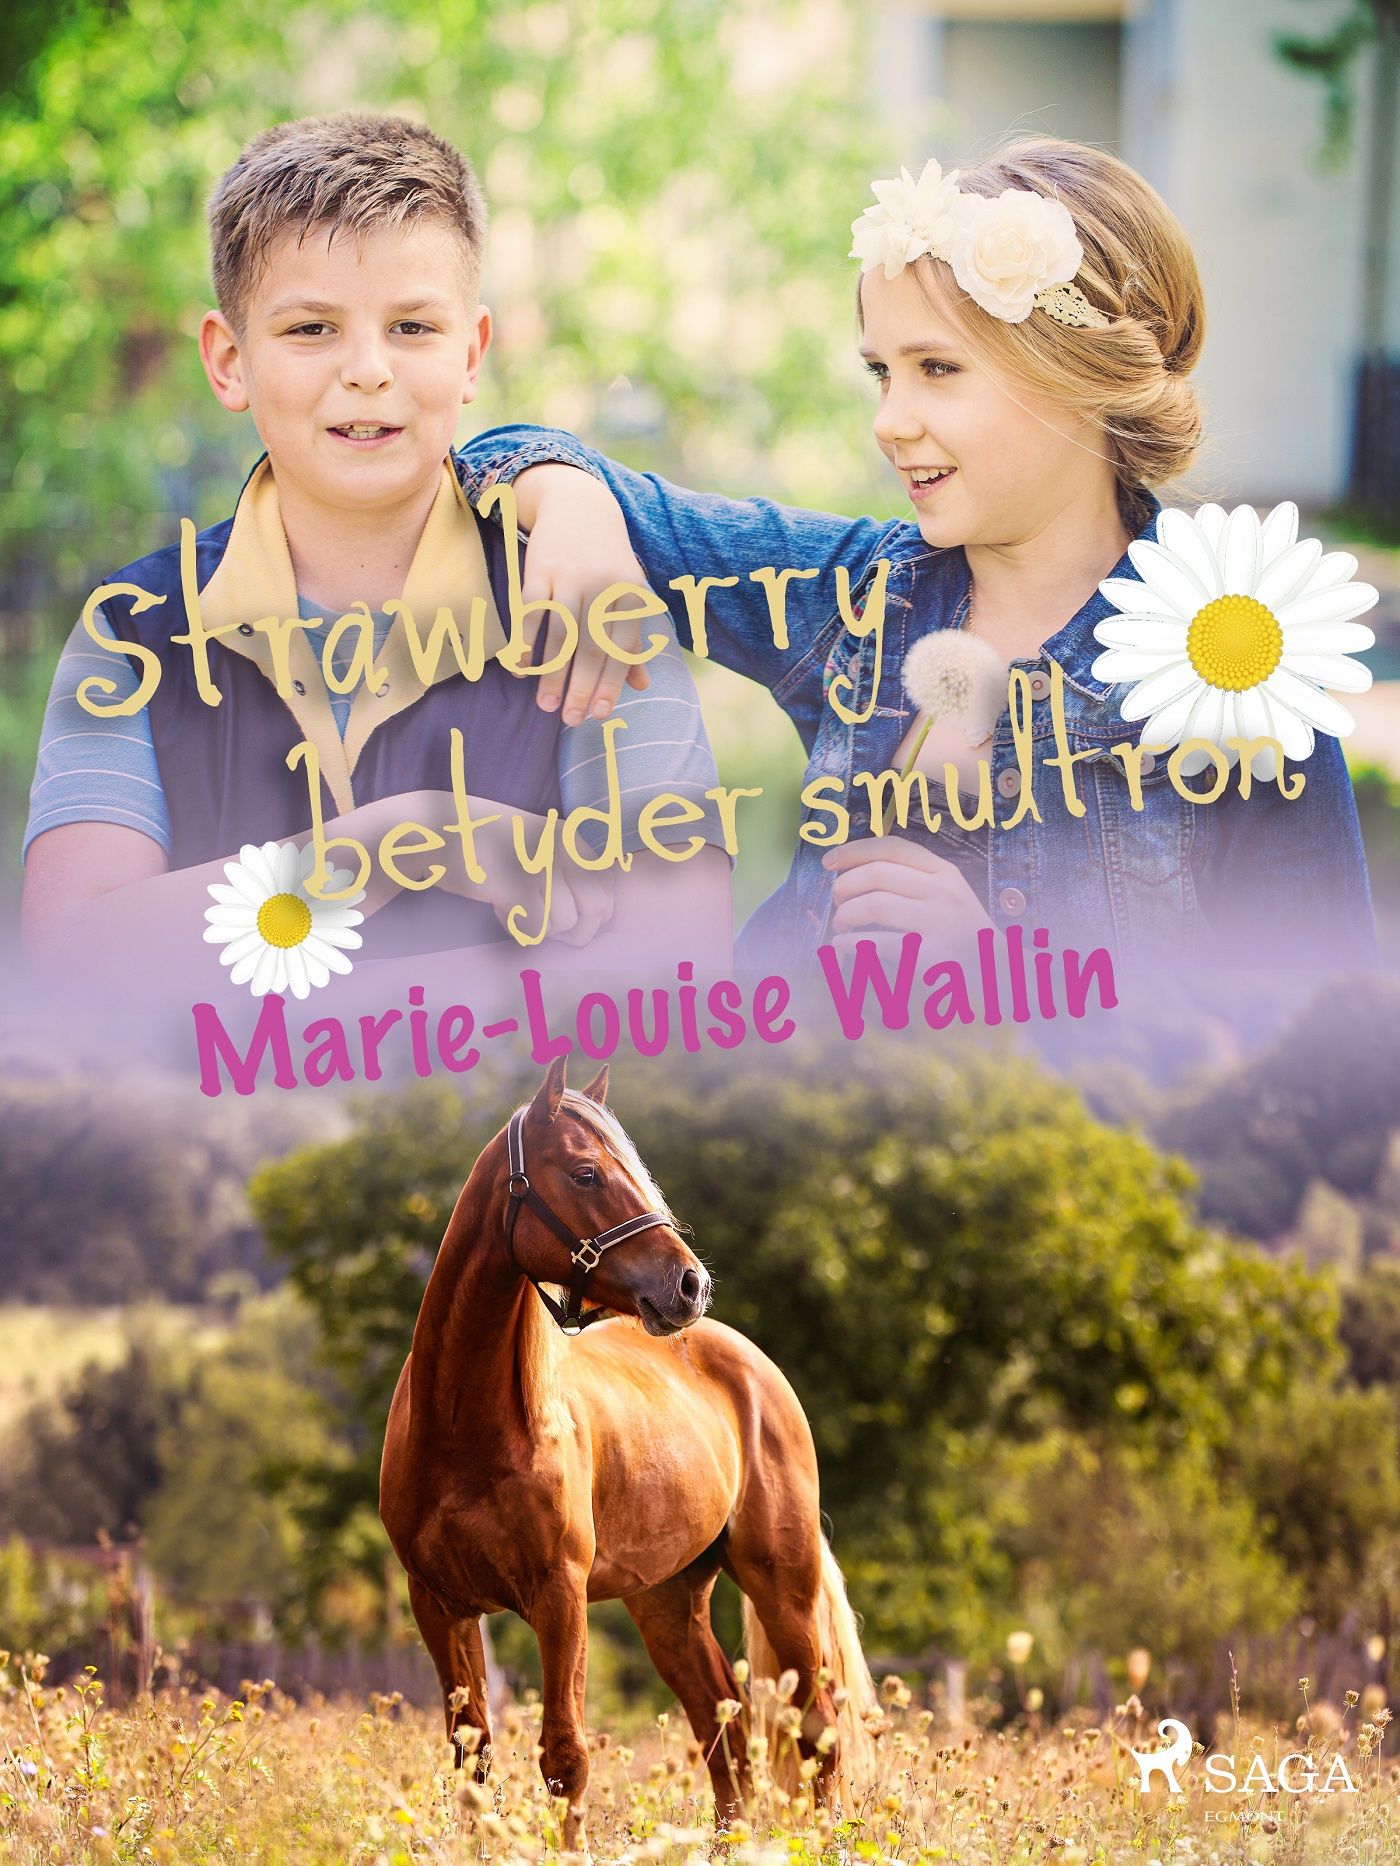 Strawberry betyder smultron, eBook by Marie-Louise Wallin